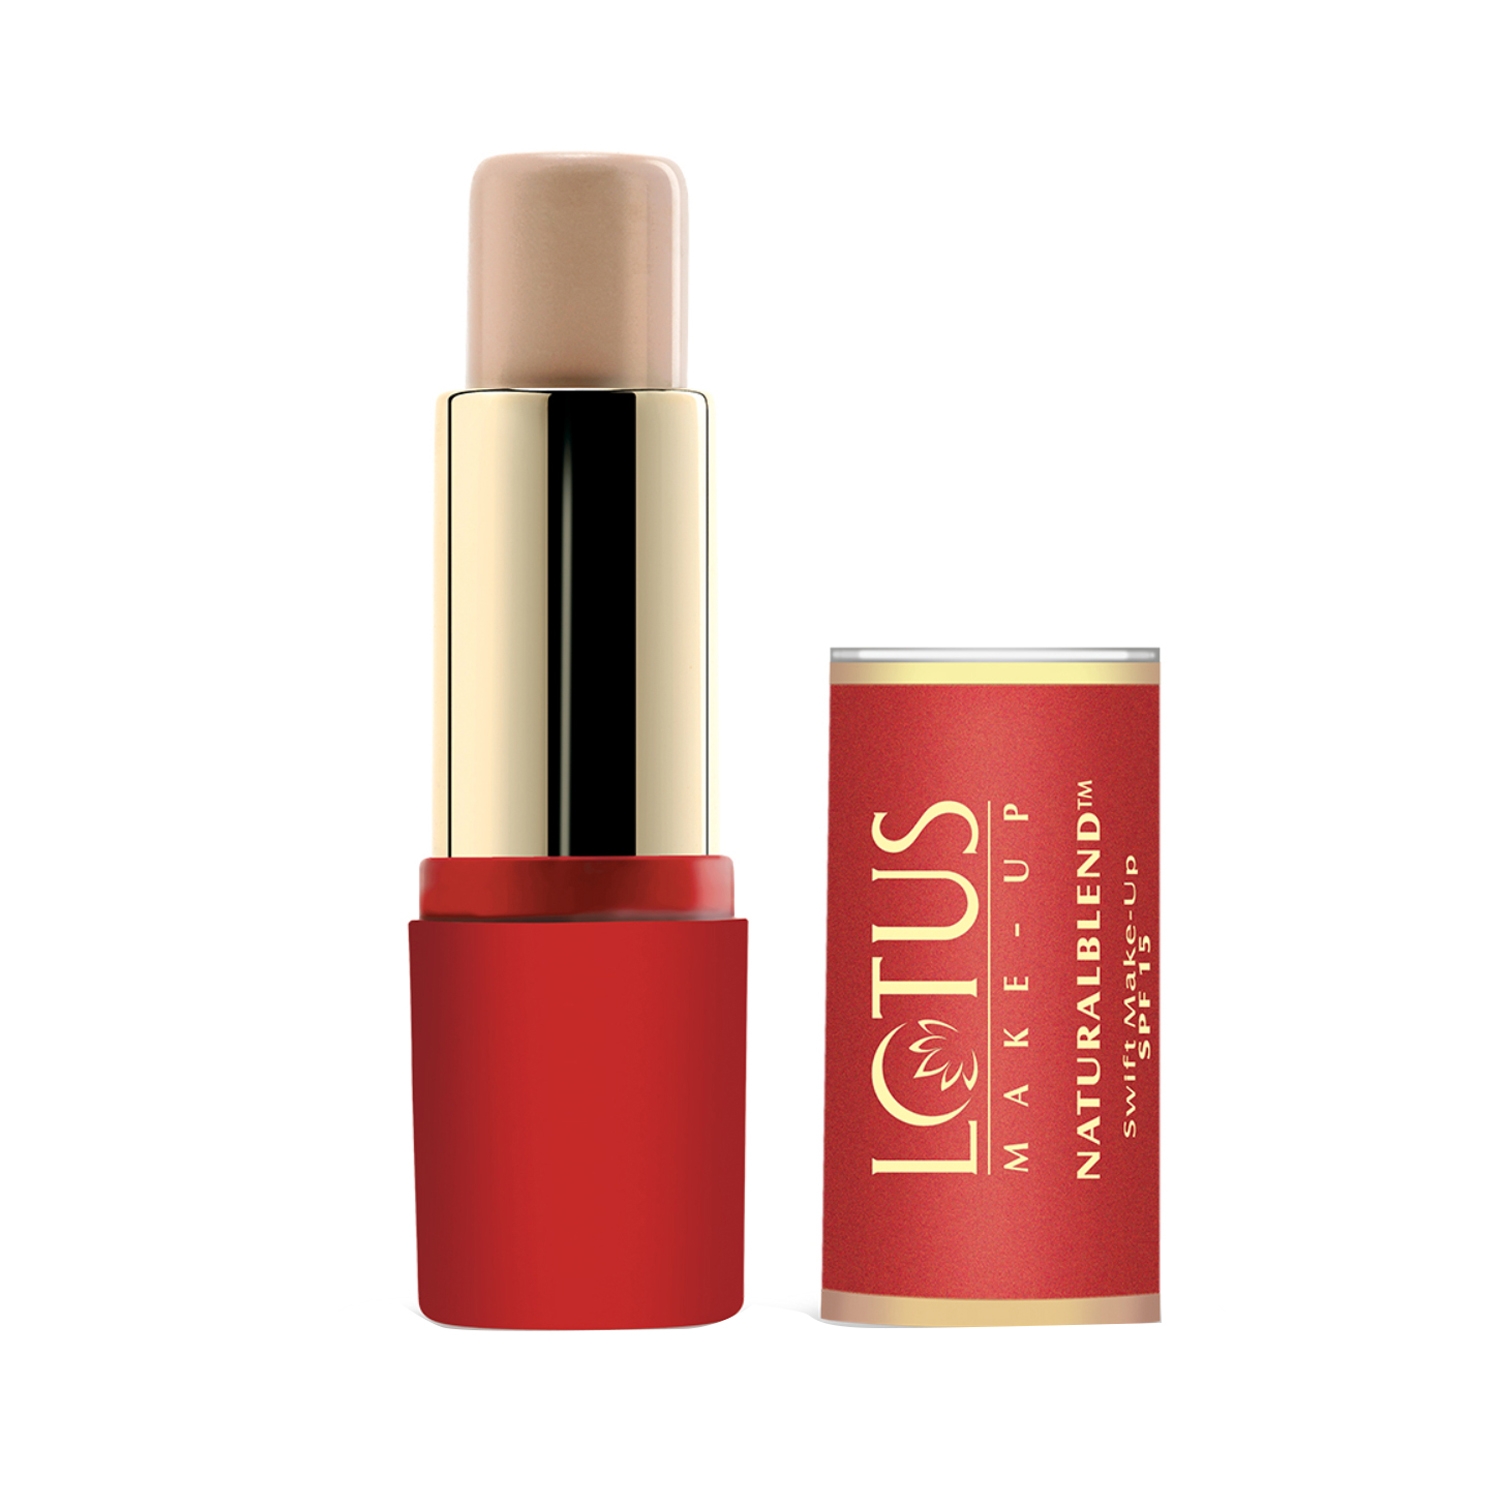 Lotus | Lotus Makeup Natural Blend Swift Makeup Stick SPF 15 - 710 Honey Beige (10g)